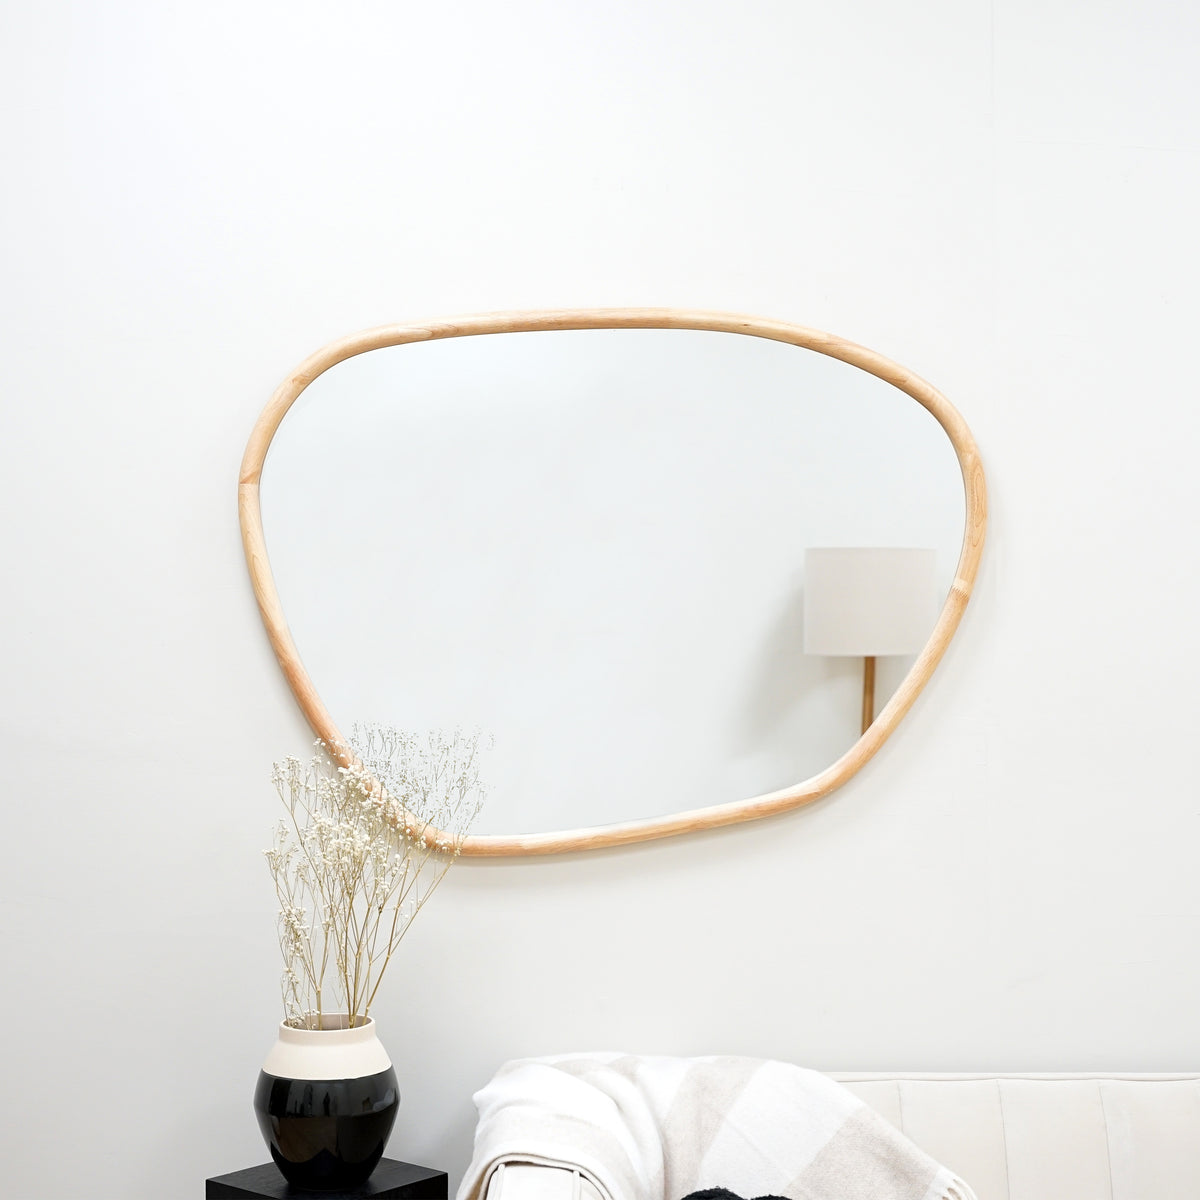 Aaliyah - Natural Organic Irregular Wooden Wall Mirror 110cm x 80cm